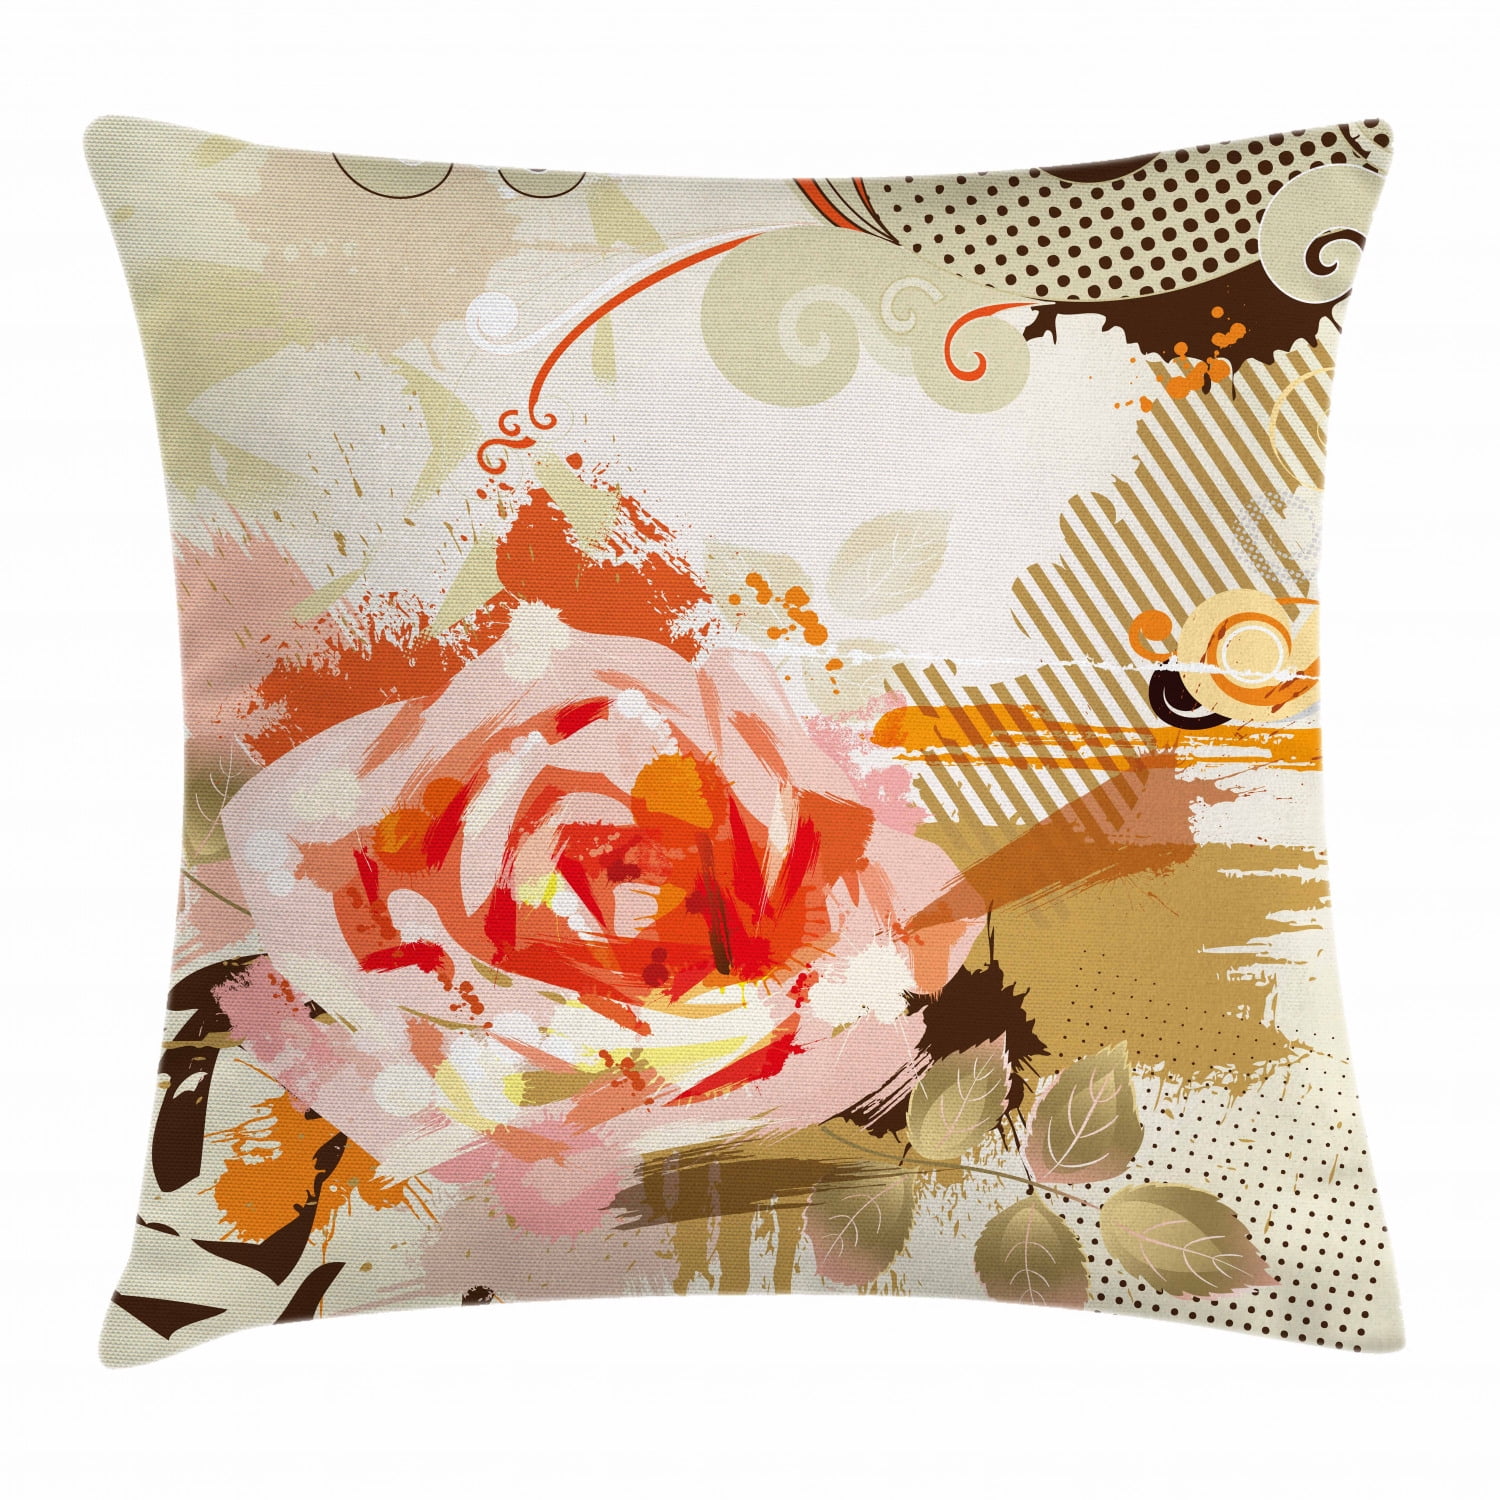 Floral Digitally Print Satin Cushion Cover Orange Pillow Case Cover Décor 12X12"